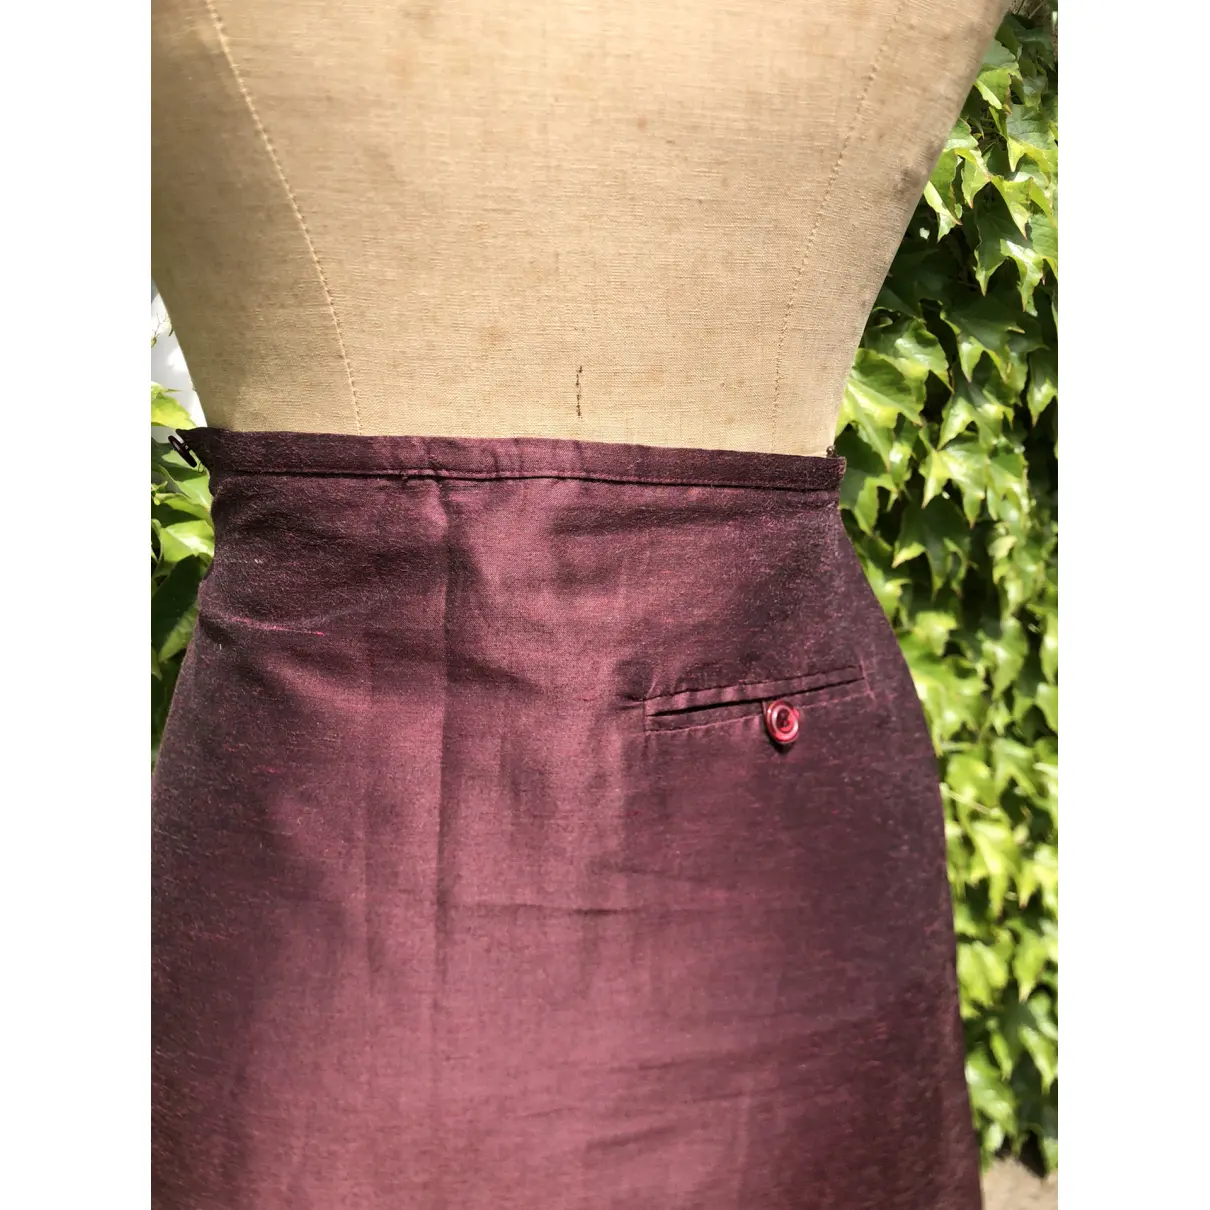 Buy Isabel Marant Silk maxi skirt online